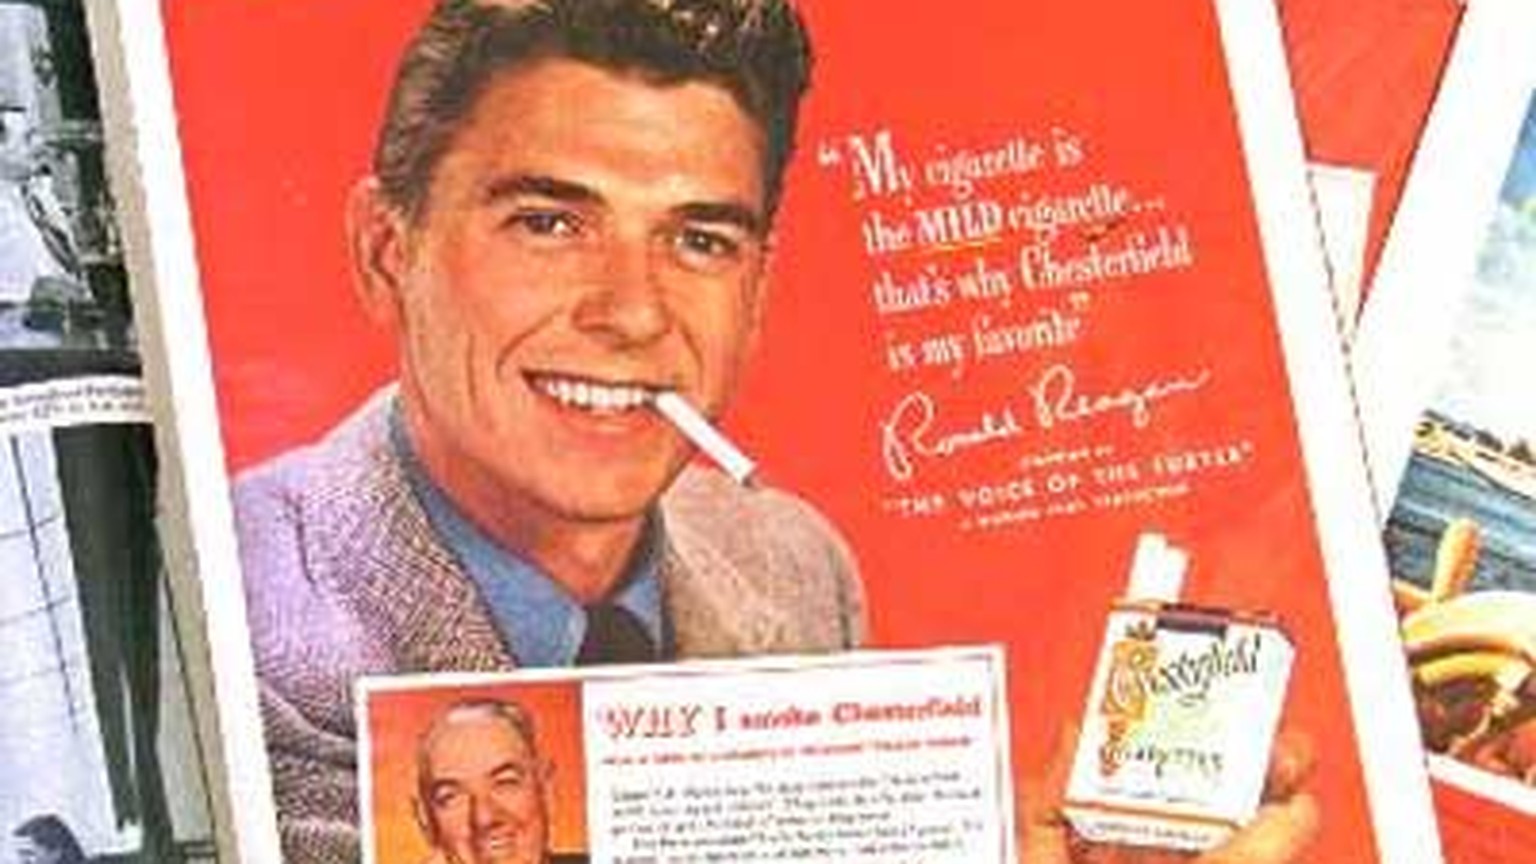 Tabakwerbung von Ronald Reagan
https://forgottenhistoryblog.com/before-becoming-president-ronald-reagan-was-a-paid-cigarette-model/